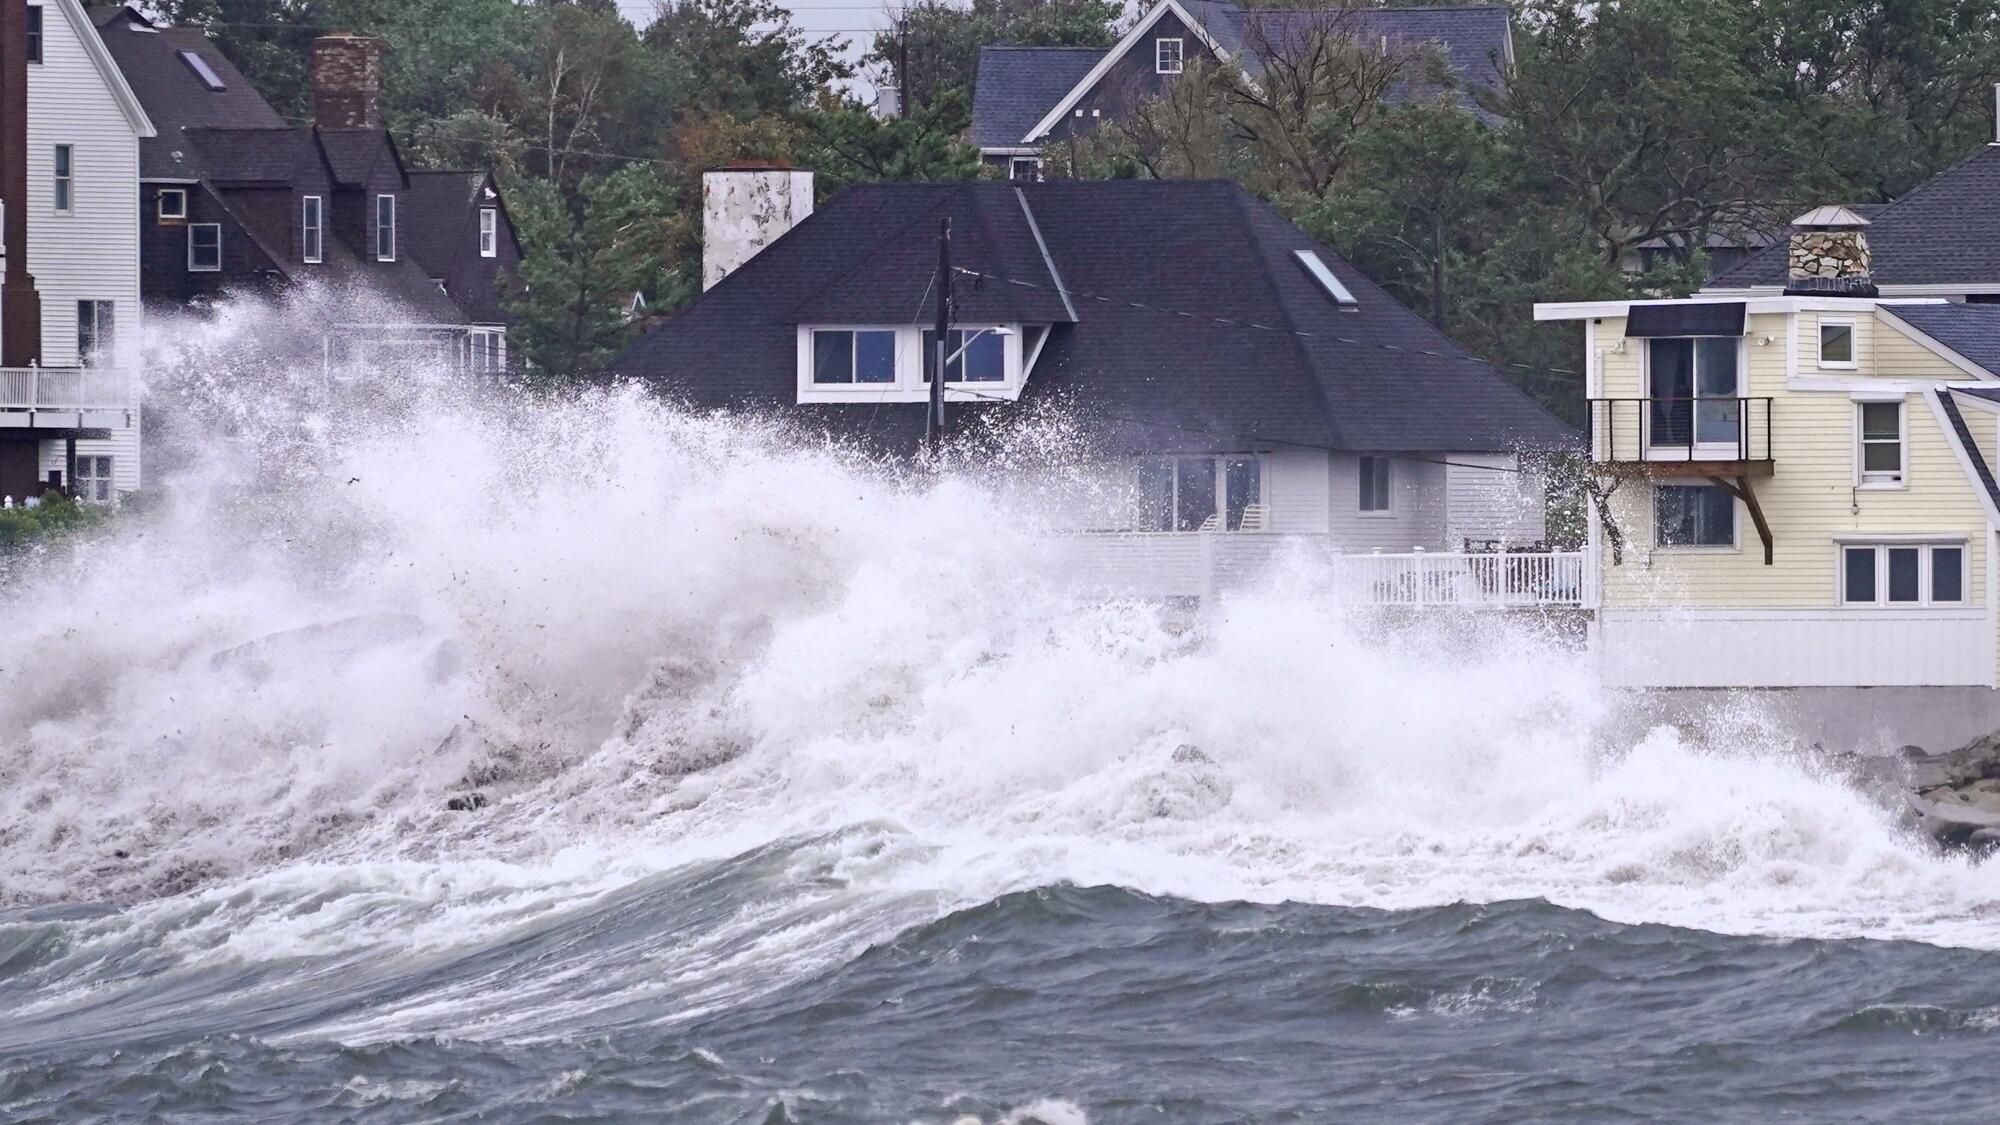 Waves are high near coastal homes.